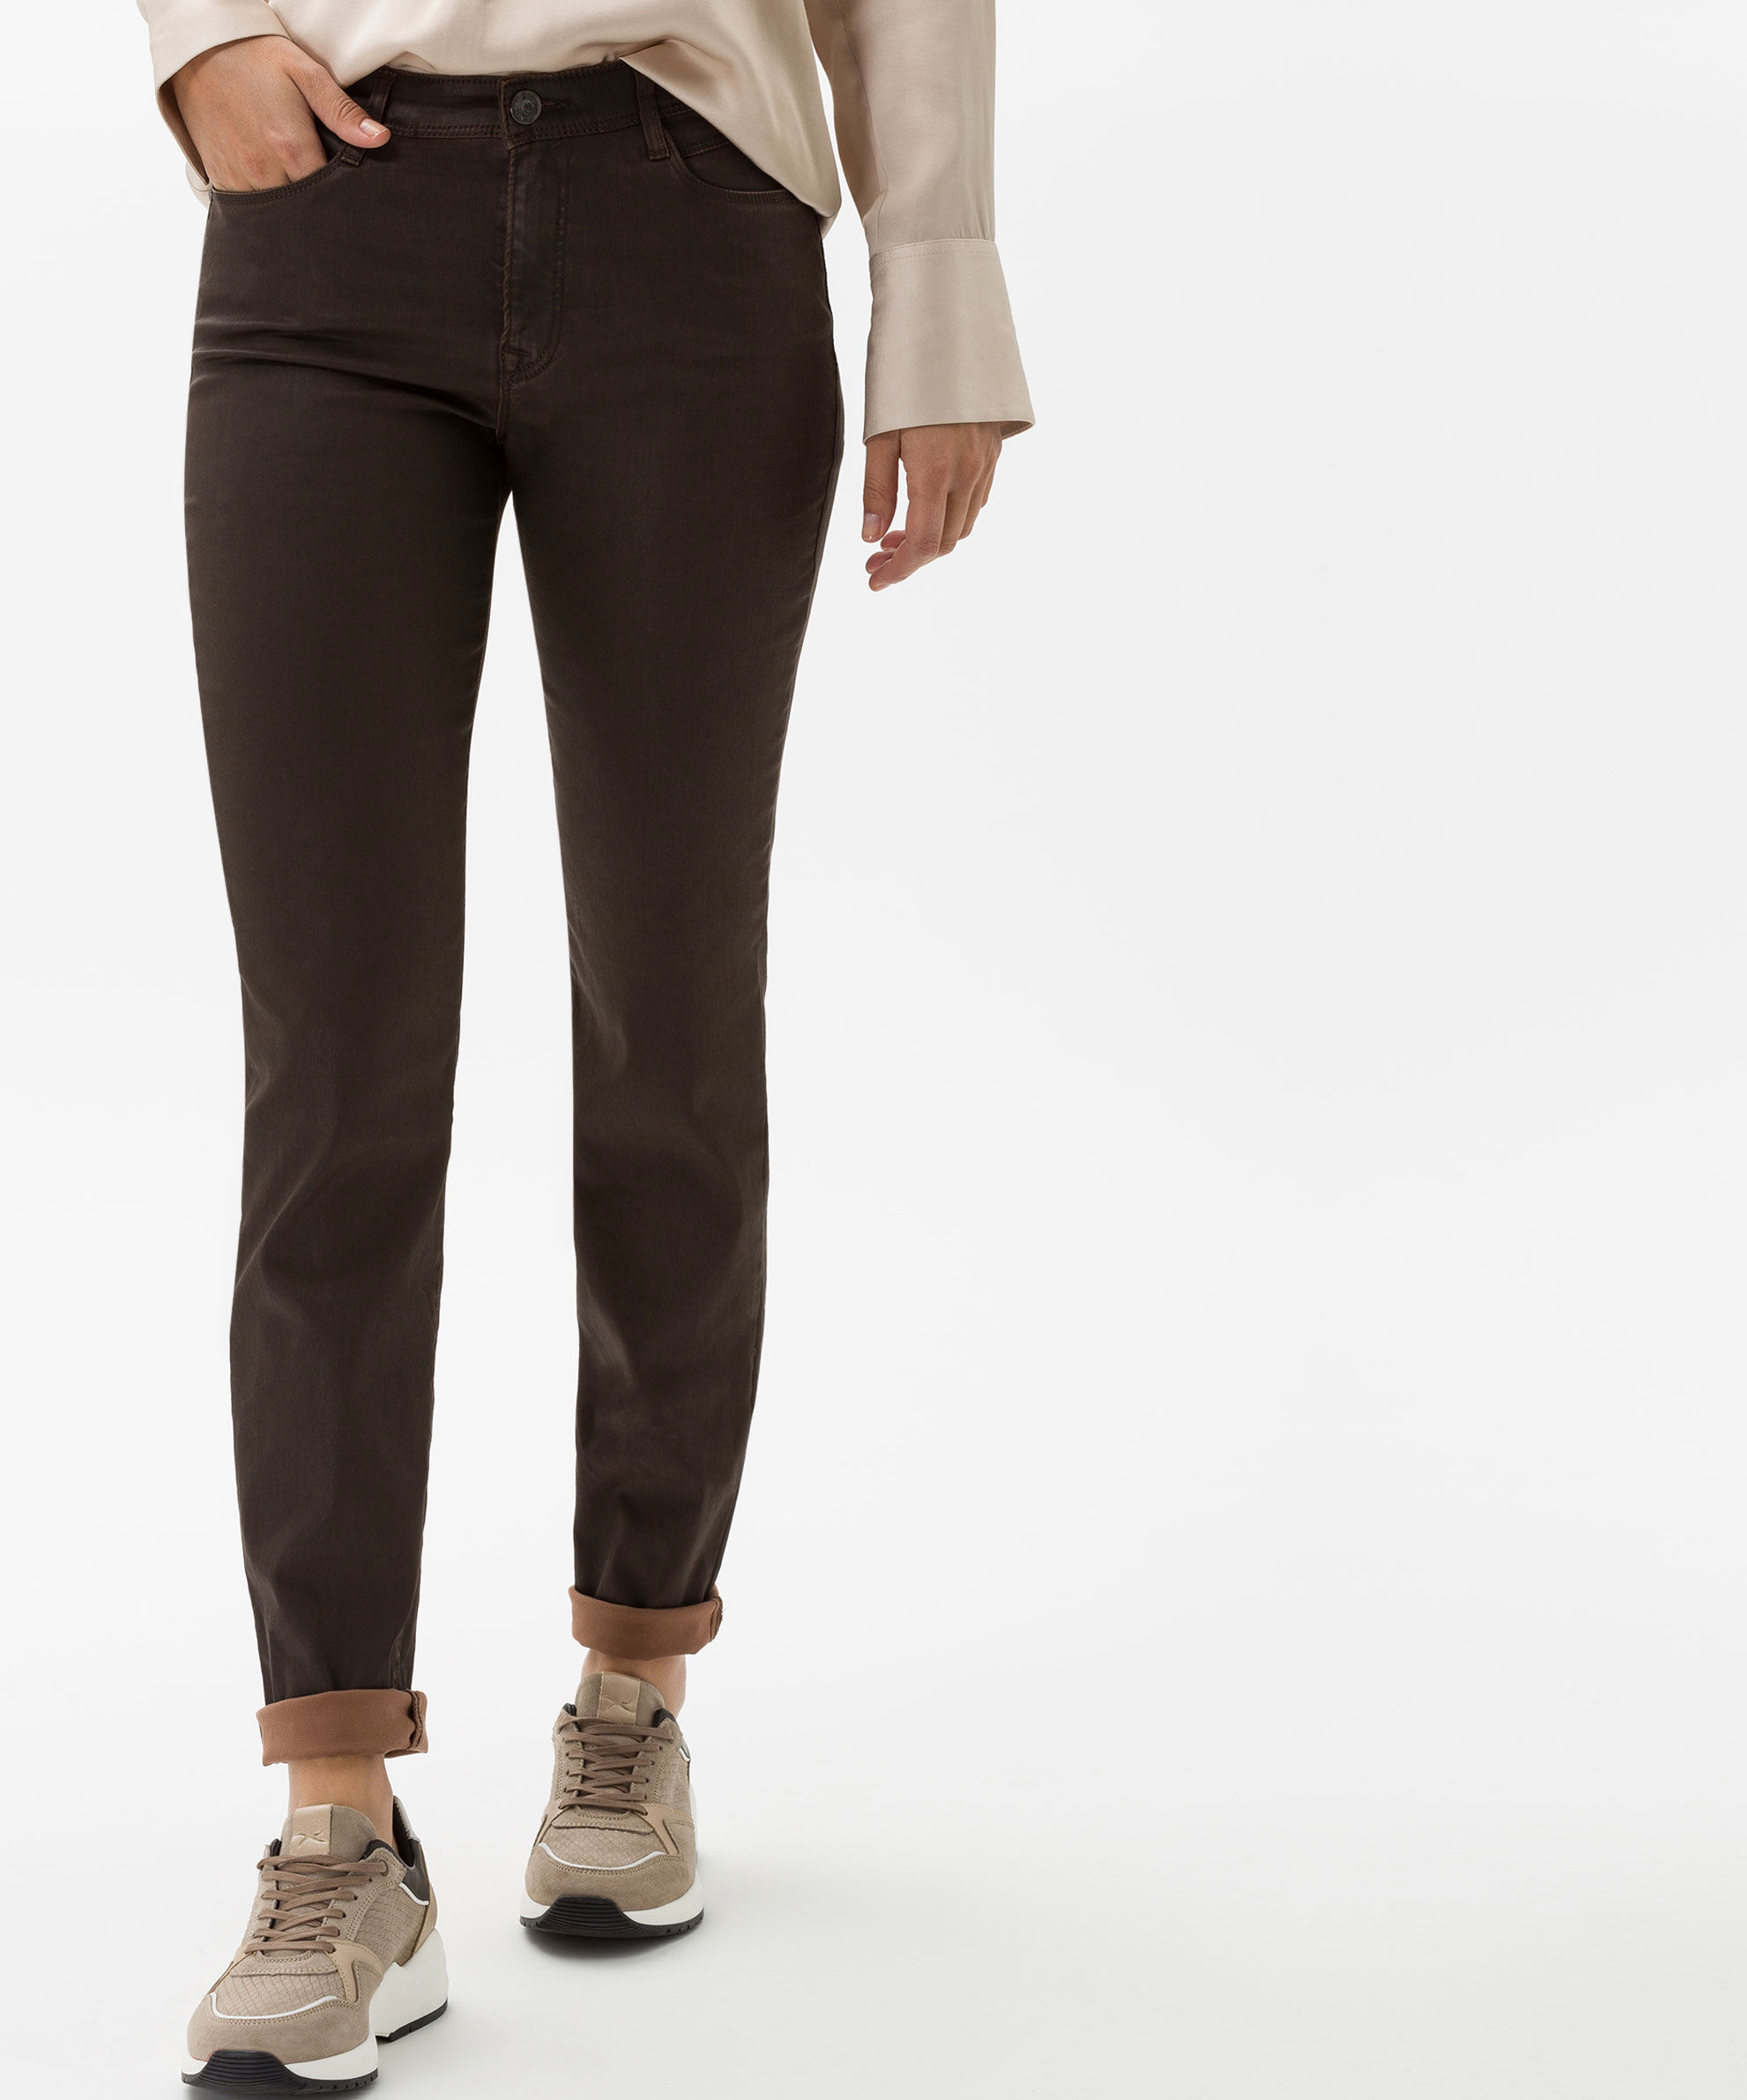 Brax Women Skinny Jeans Coated brown clean Shop - Mode Shakira, Denim in Style Hartmann